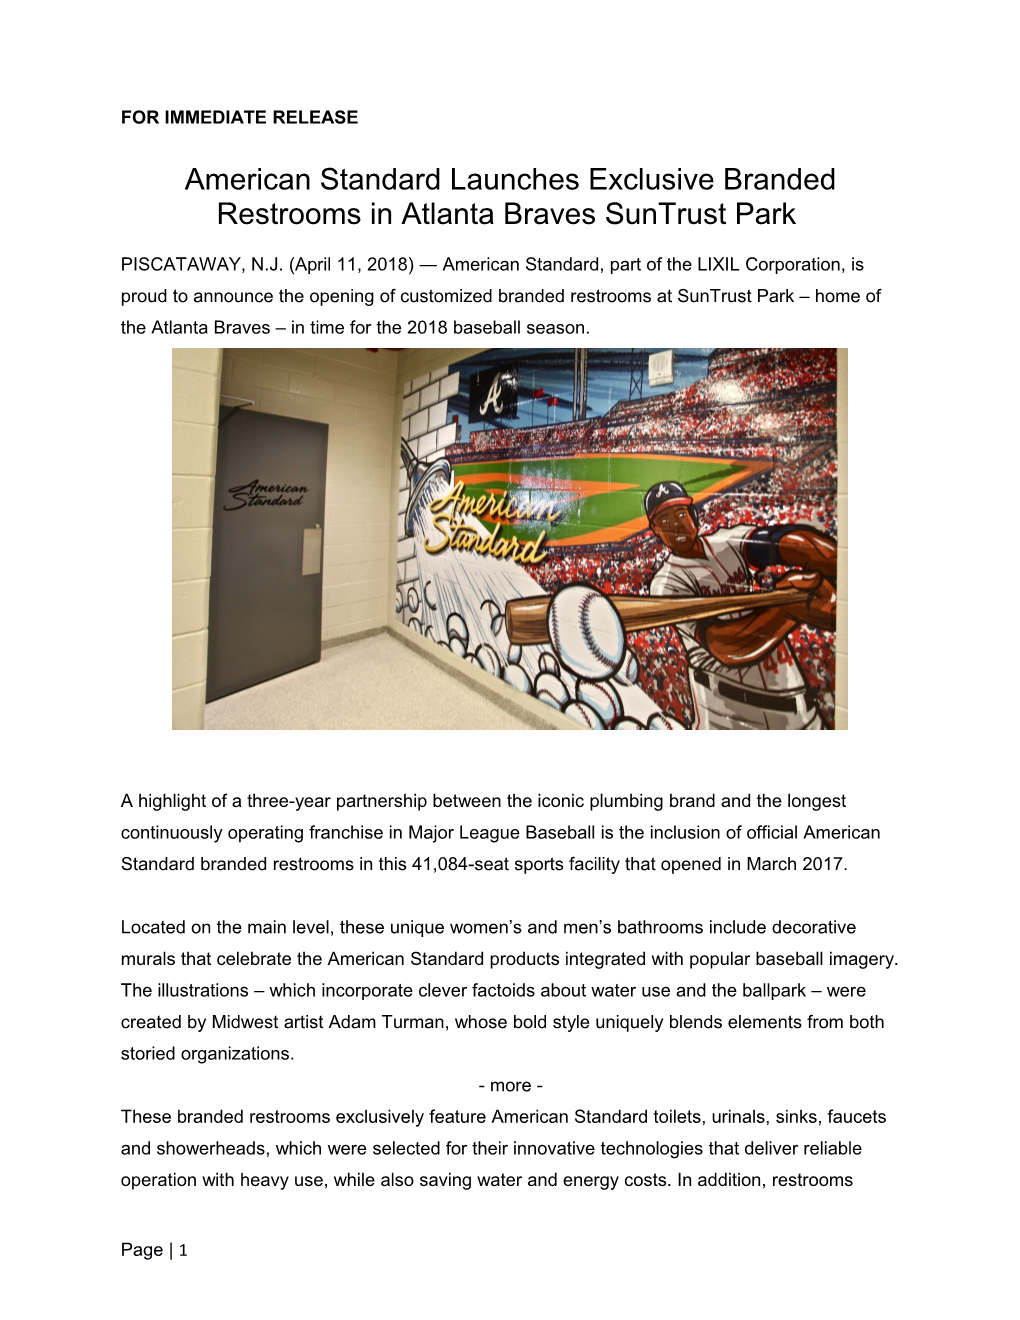 American Standard Launches Exclusive Branded Restrooms in Atlanta Braves Suntrust Park